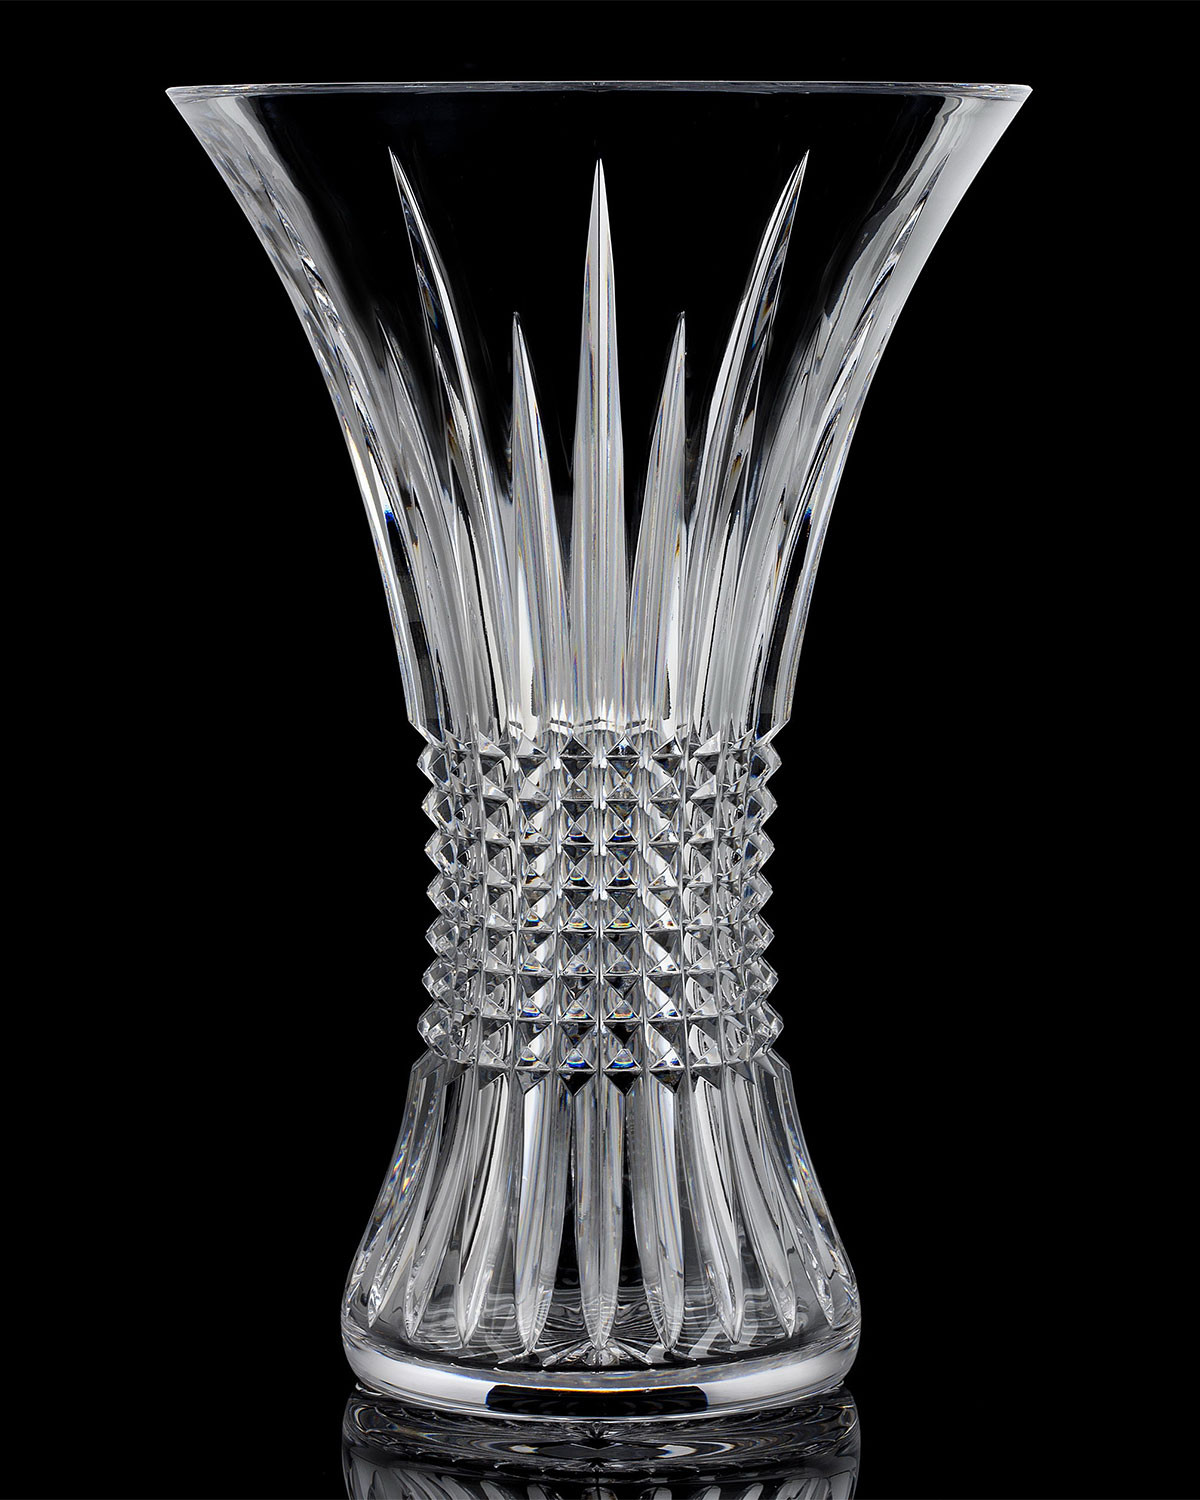 10 Fabulous Waterford Lismore Vase 8 2023 free download waterford lismore vase 8 of waterford crystal lismore diamond 12 vase neiman marcus inside lismore diamond 12 vase